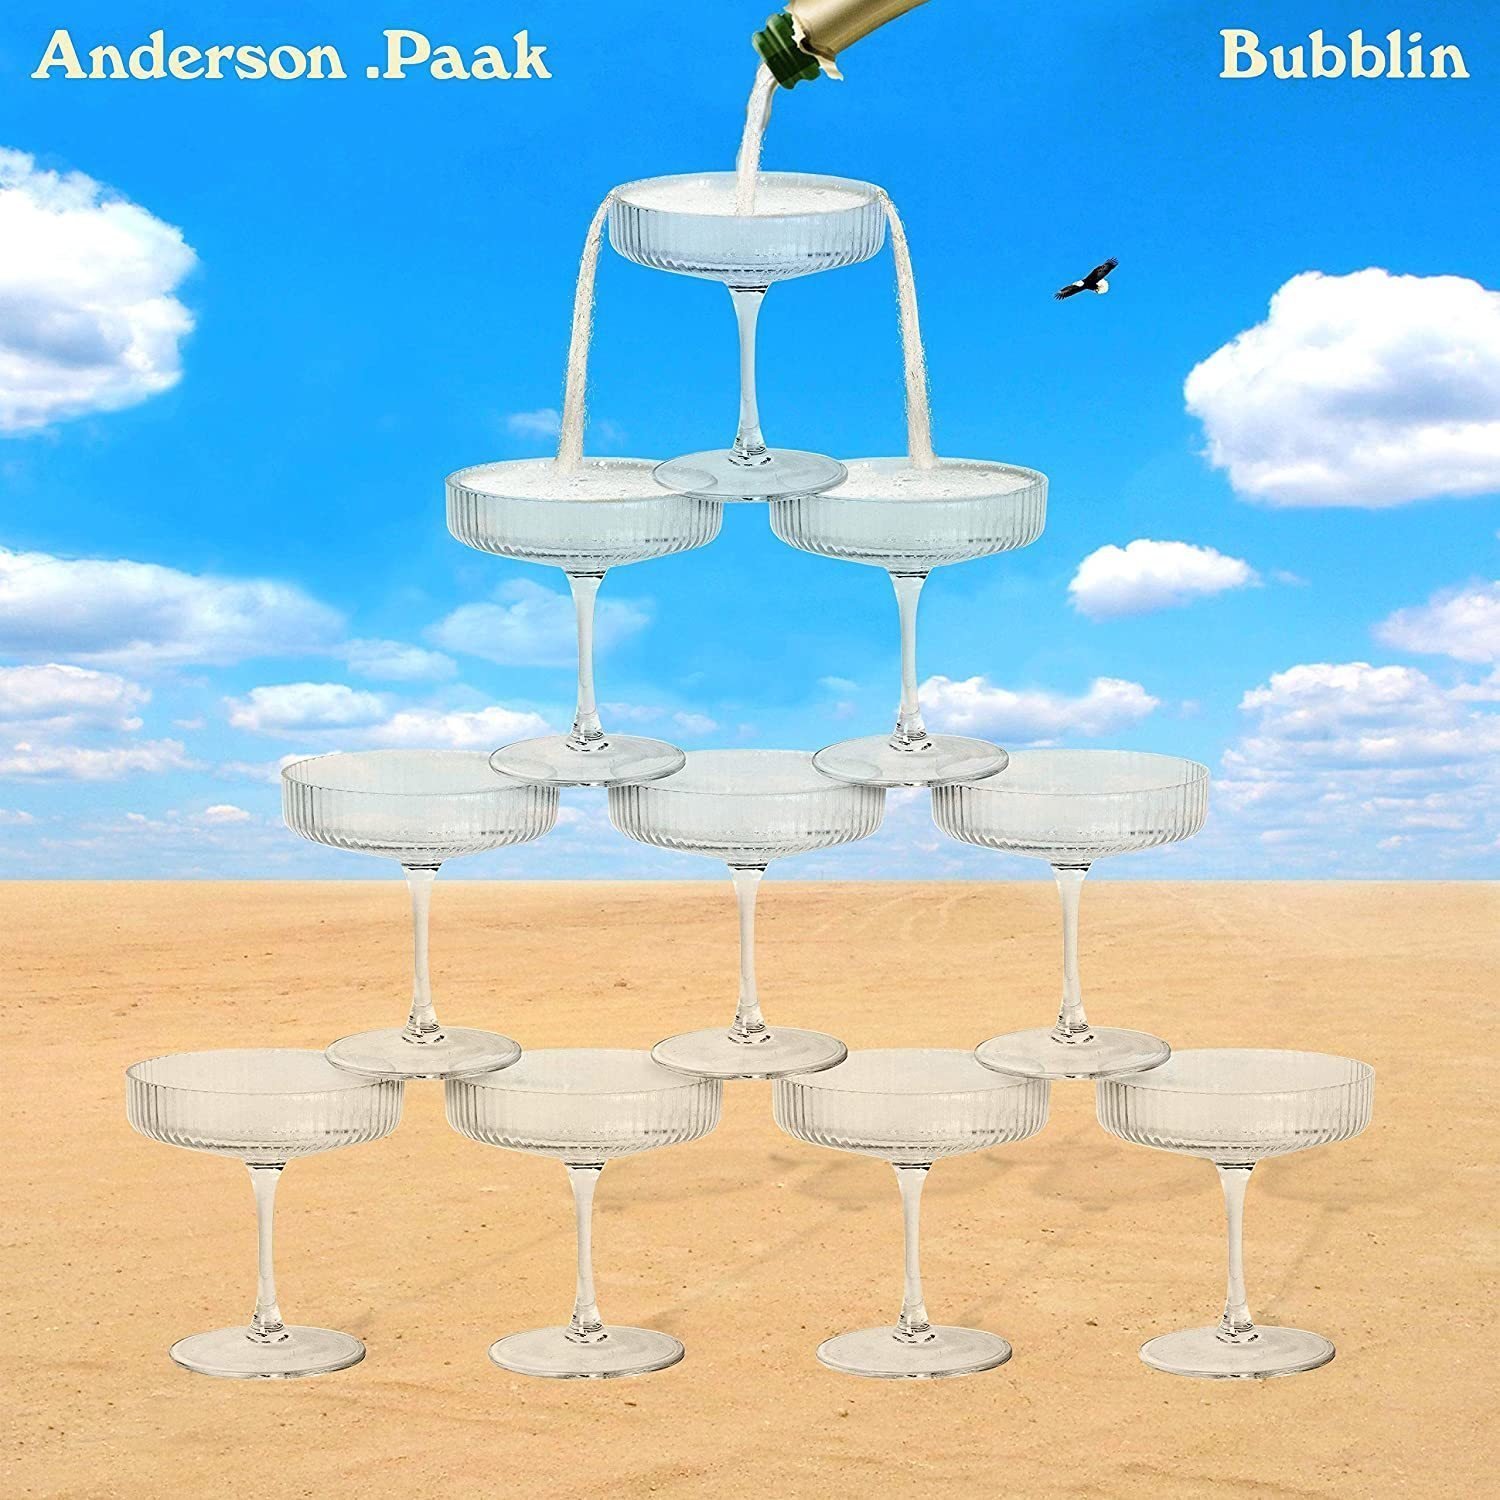 Disque vinyle Anderson Paak - RSD - Bubblin (LP)